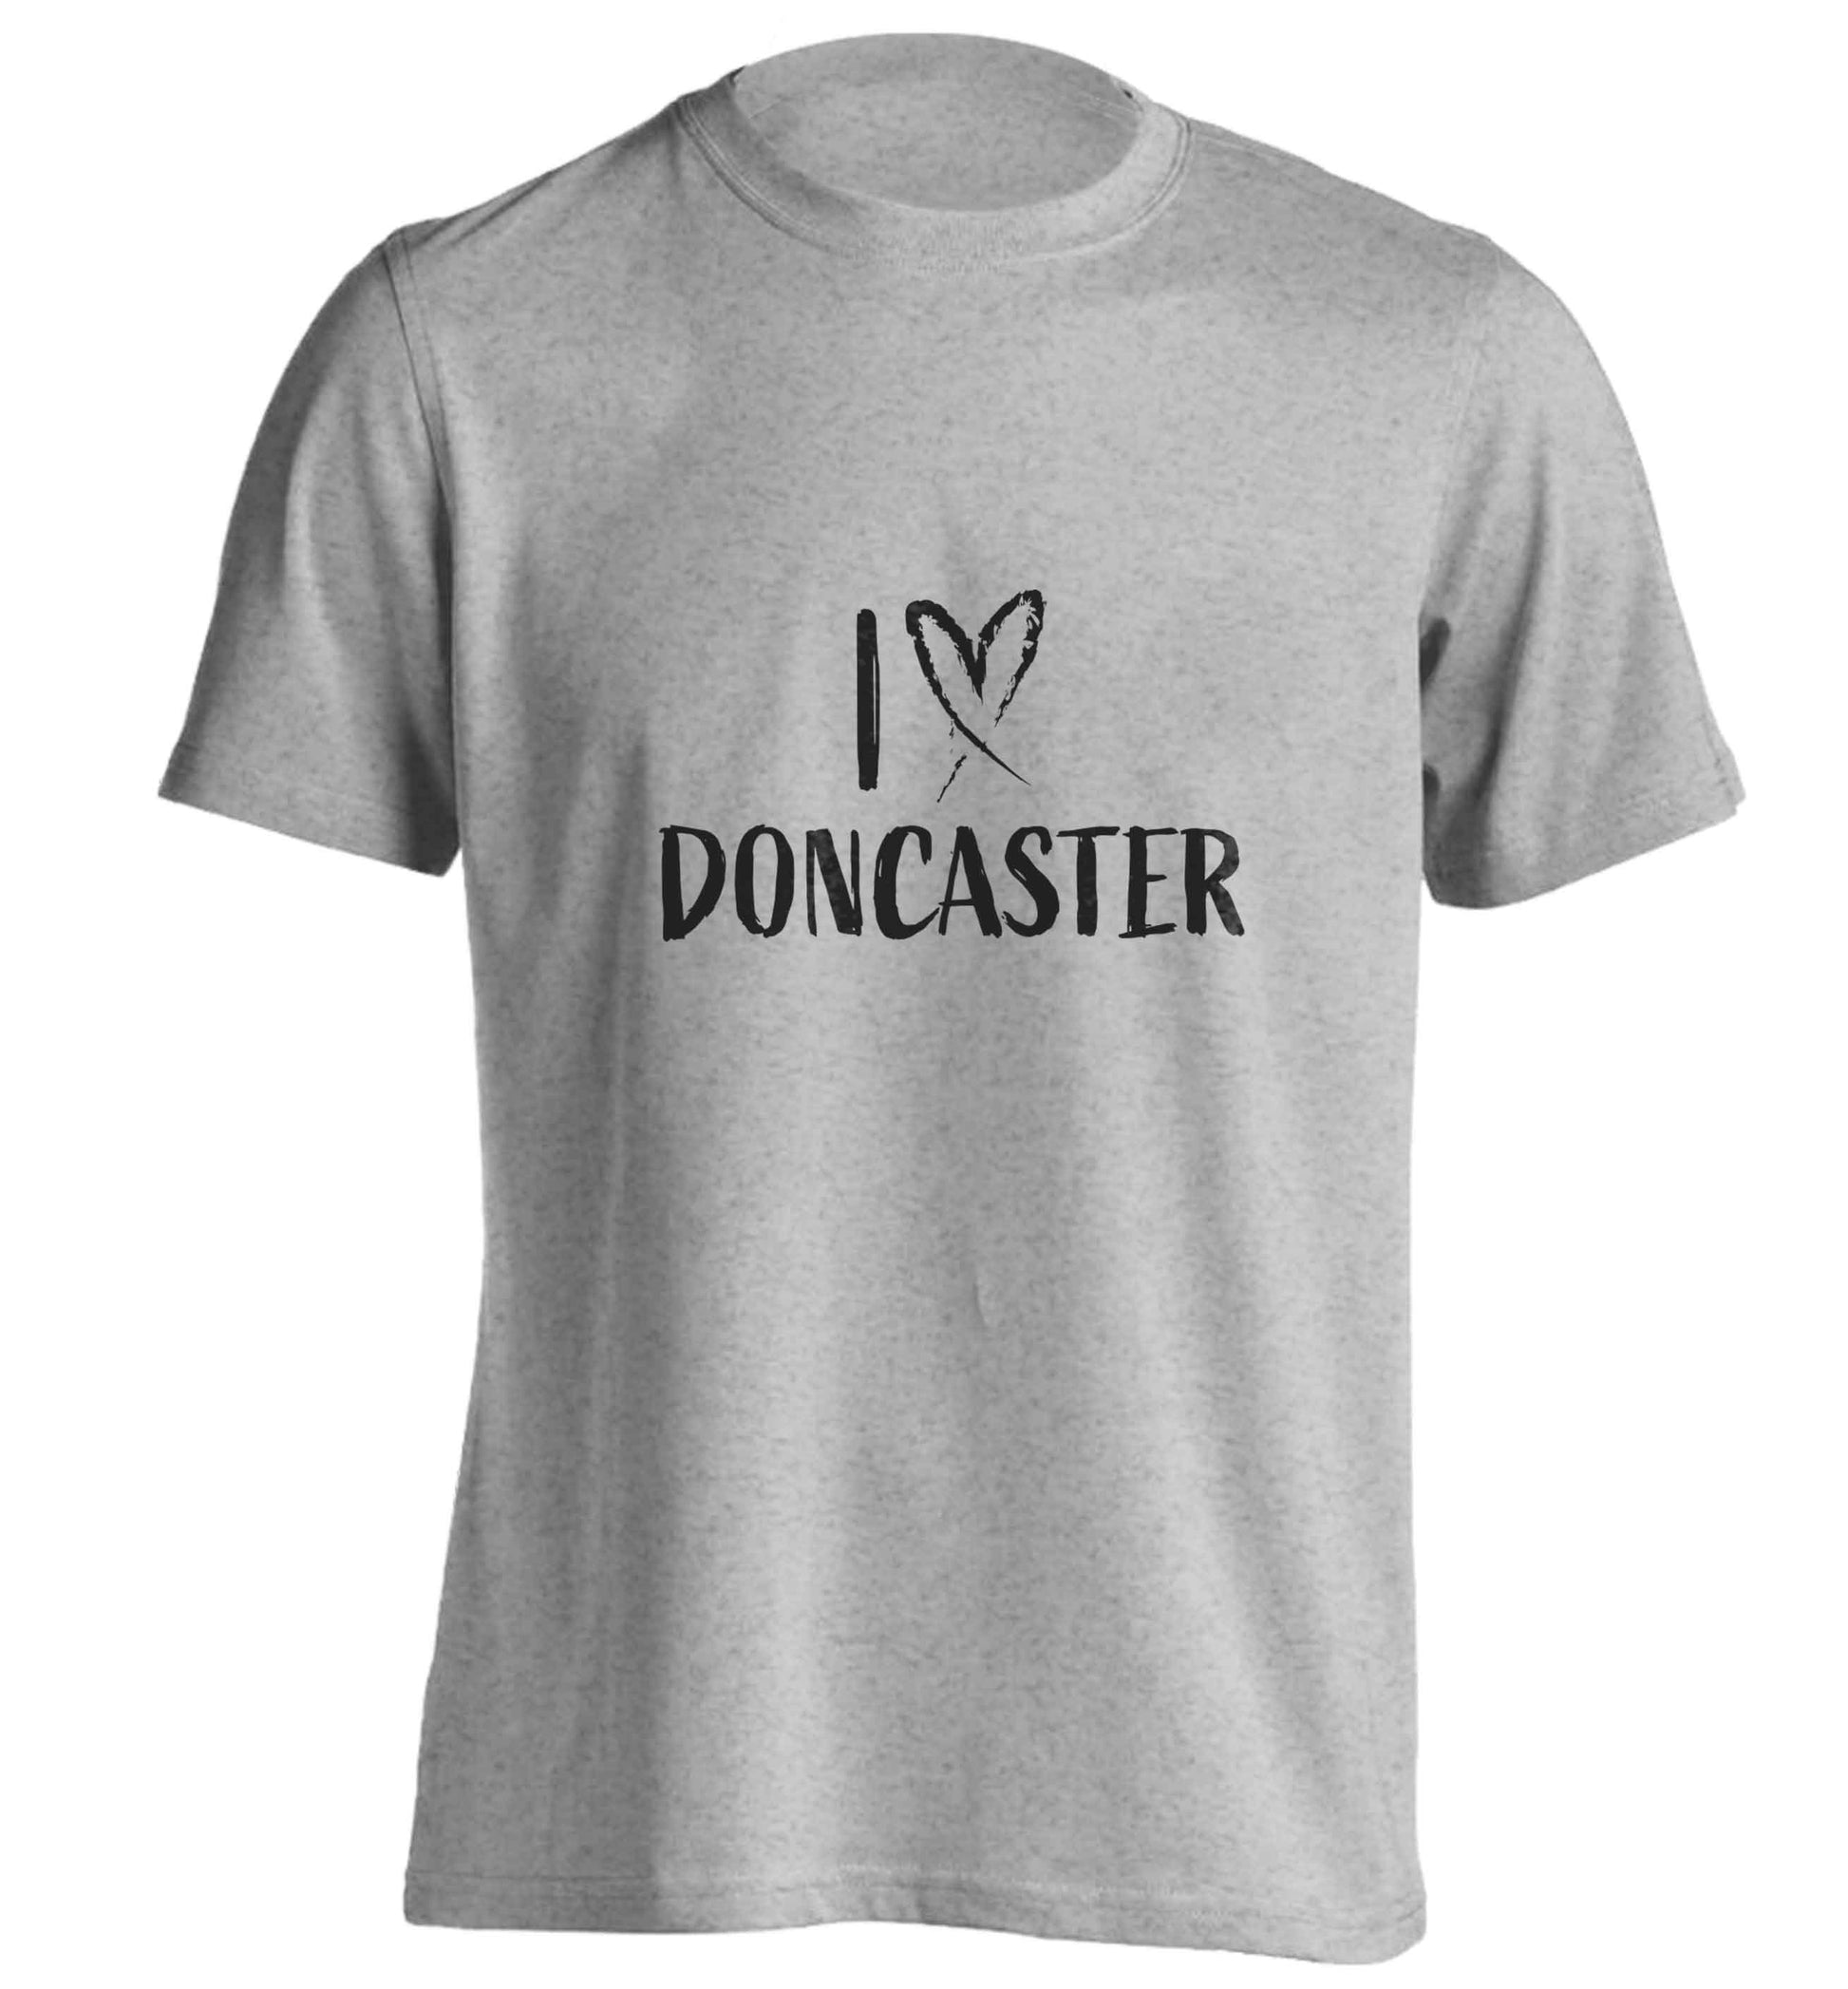 I love Doncaster adults unisex grey Tshirt 2XL